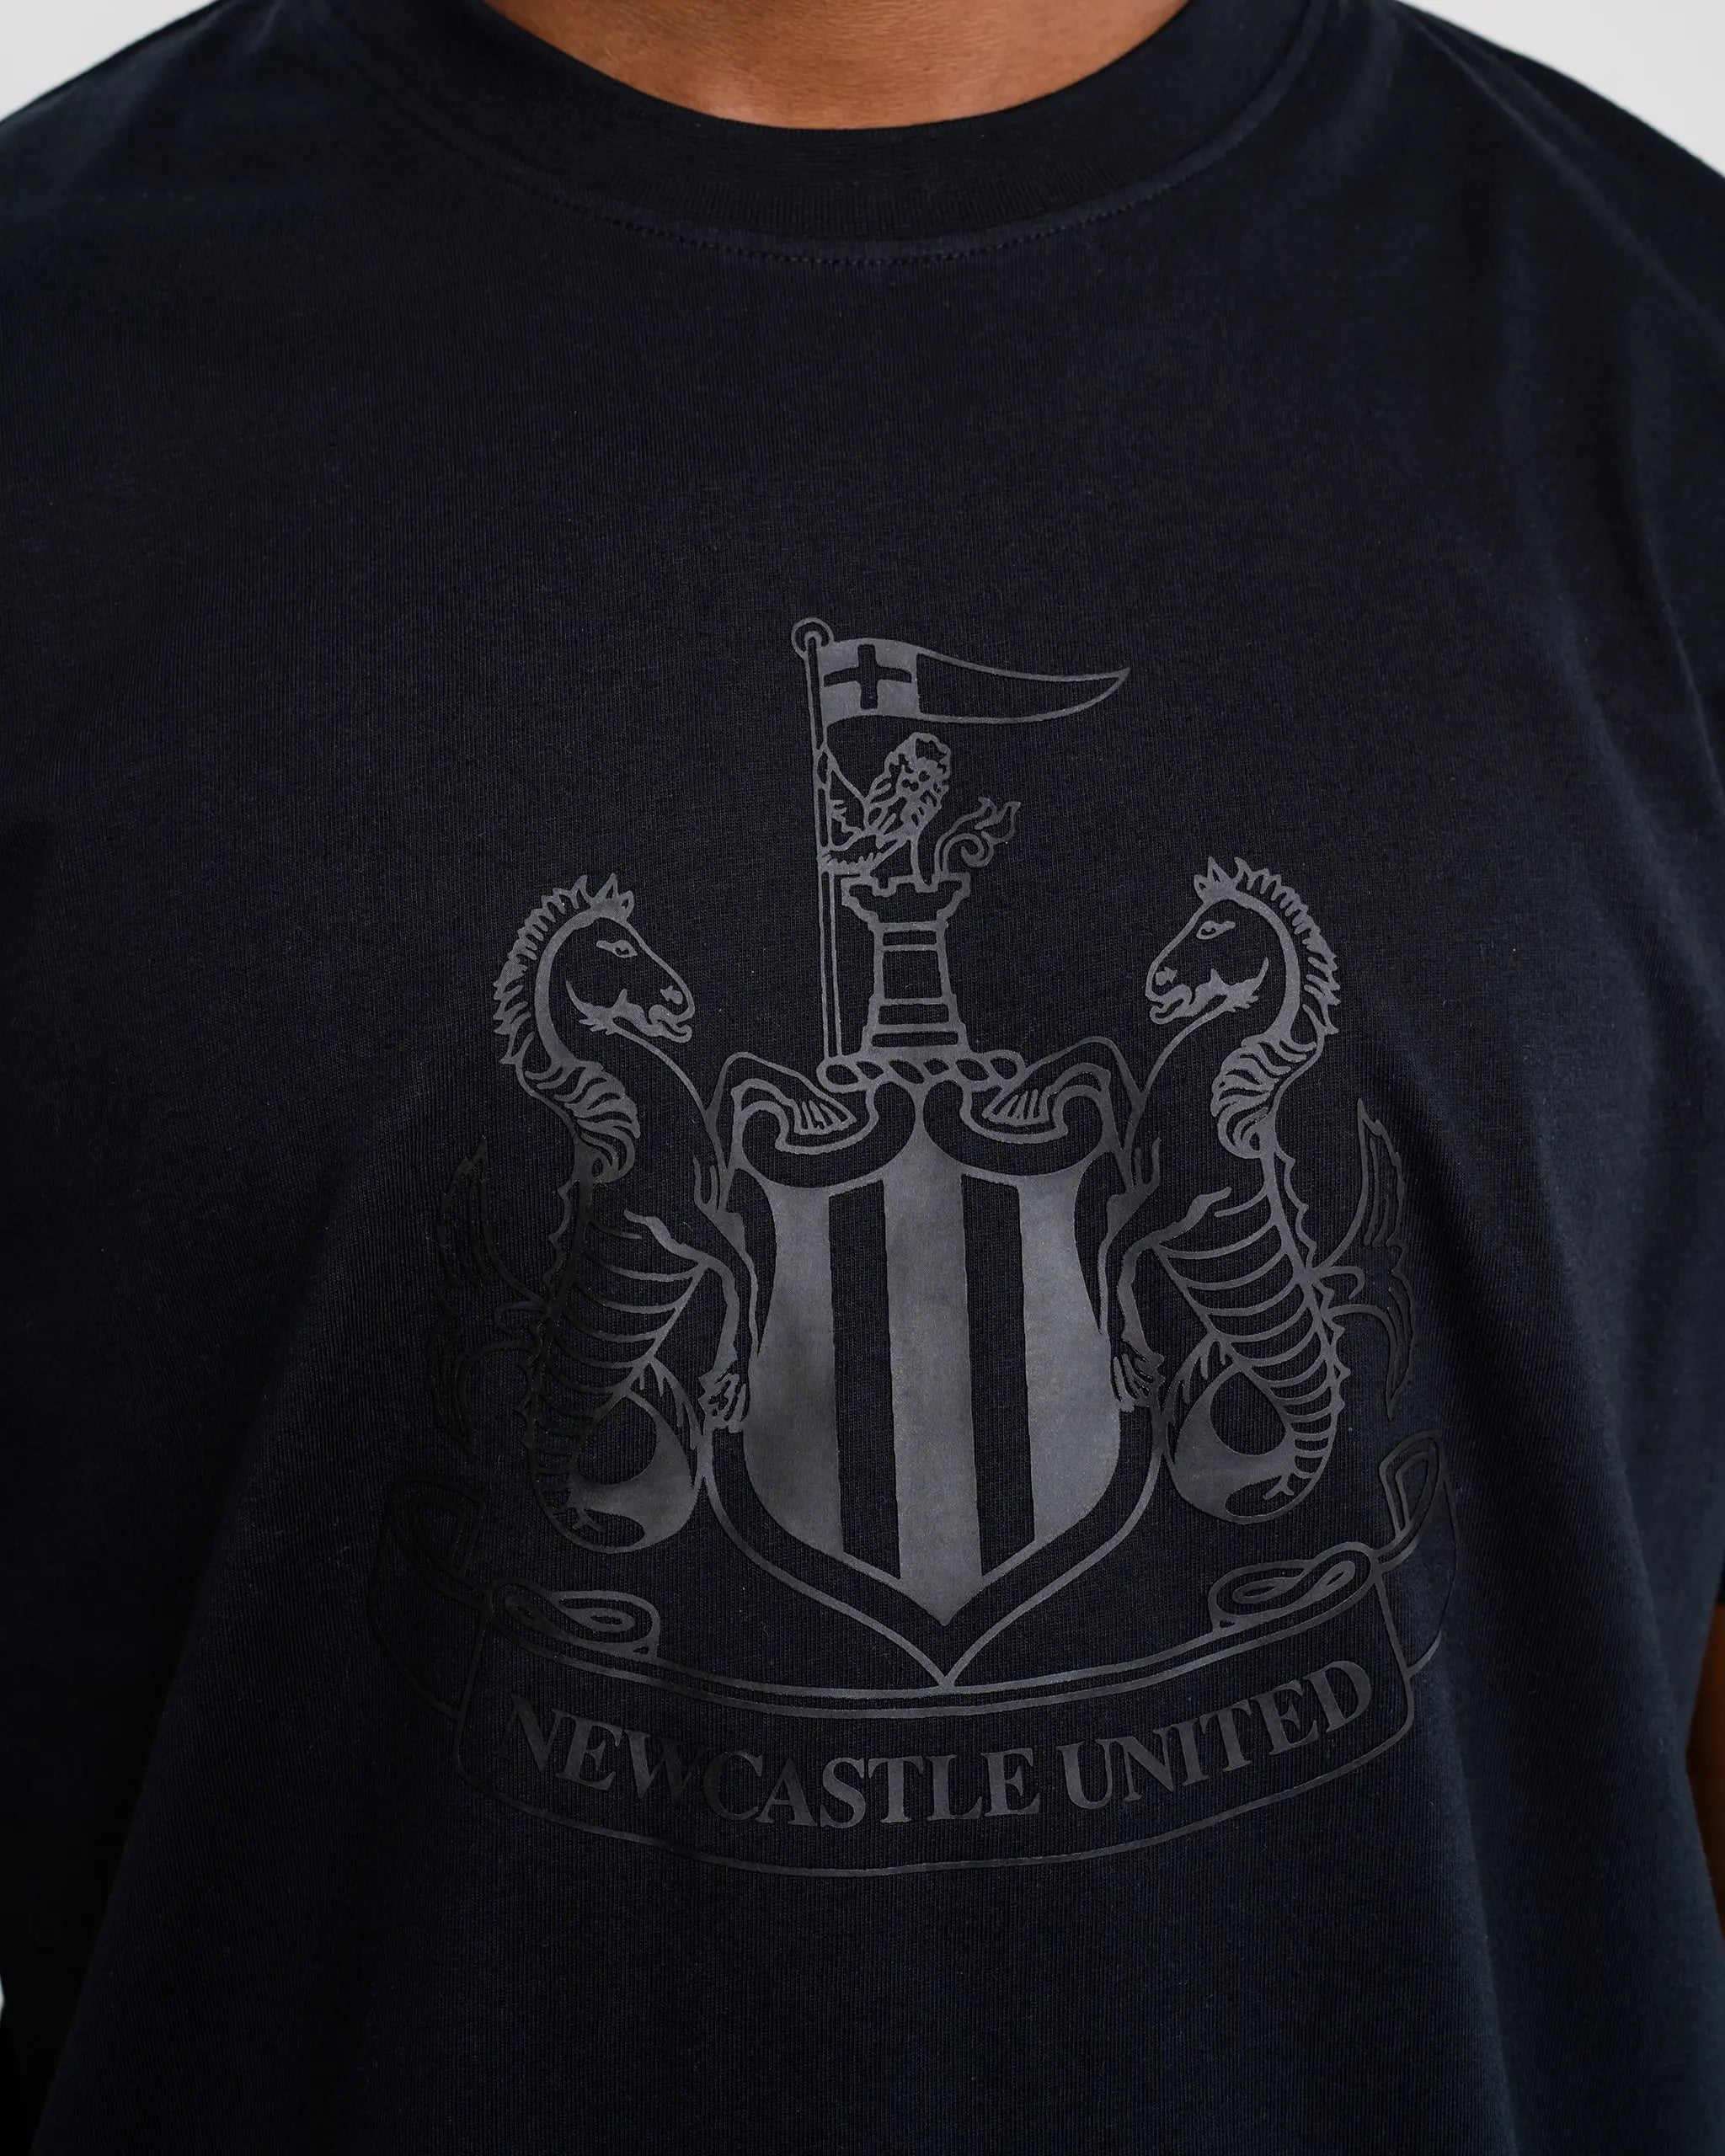 Newcastle United Mono Graphic T-Shirt